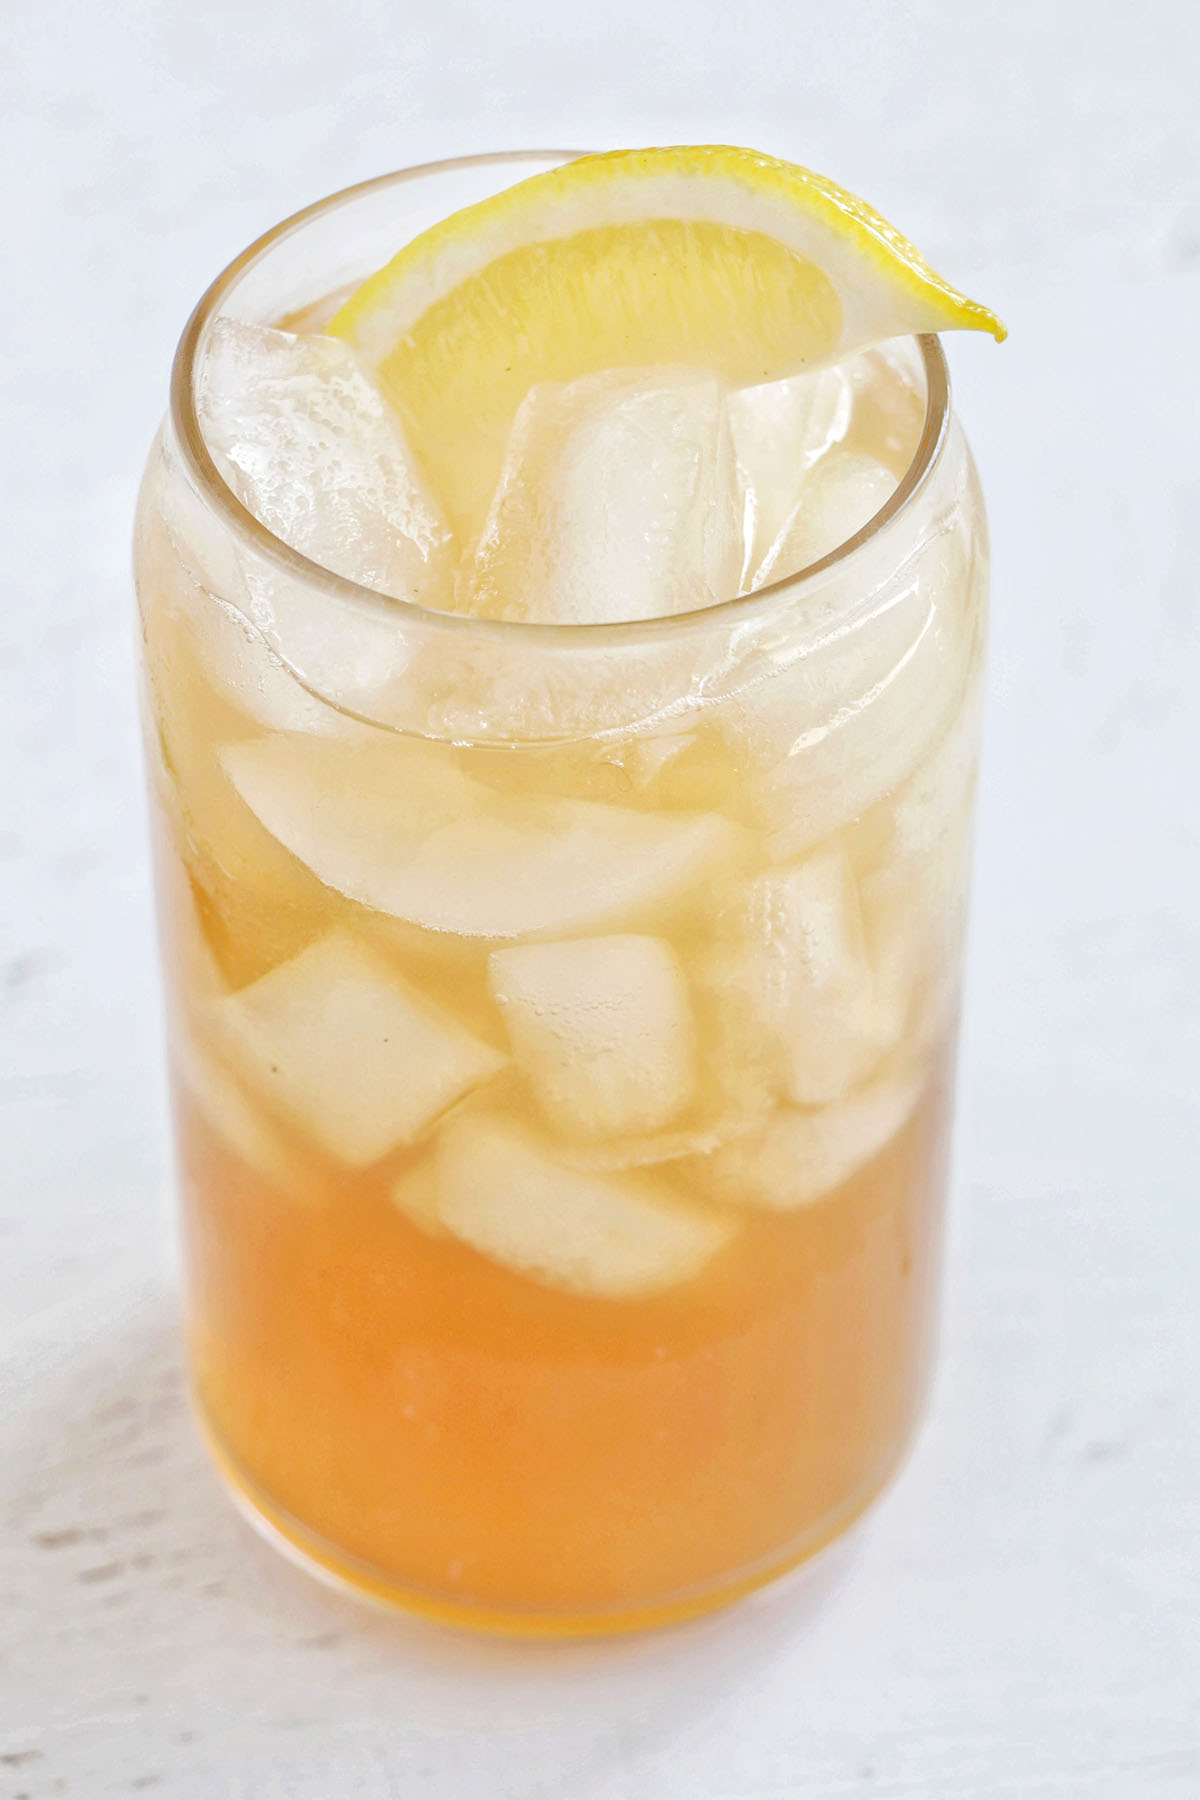 bourbon iced tea drink with lemon garnish.